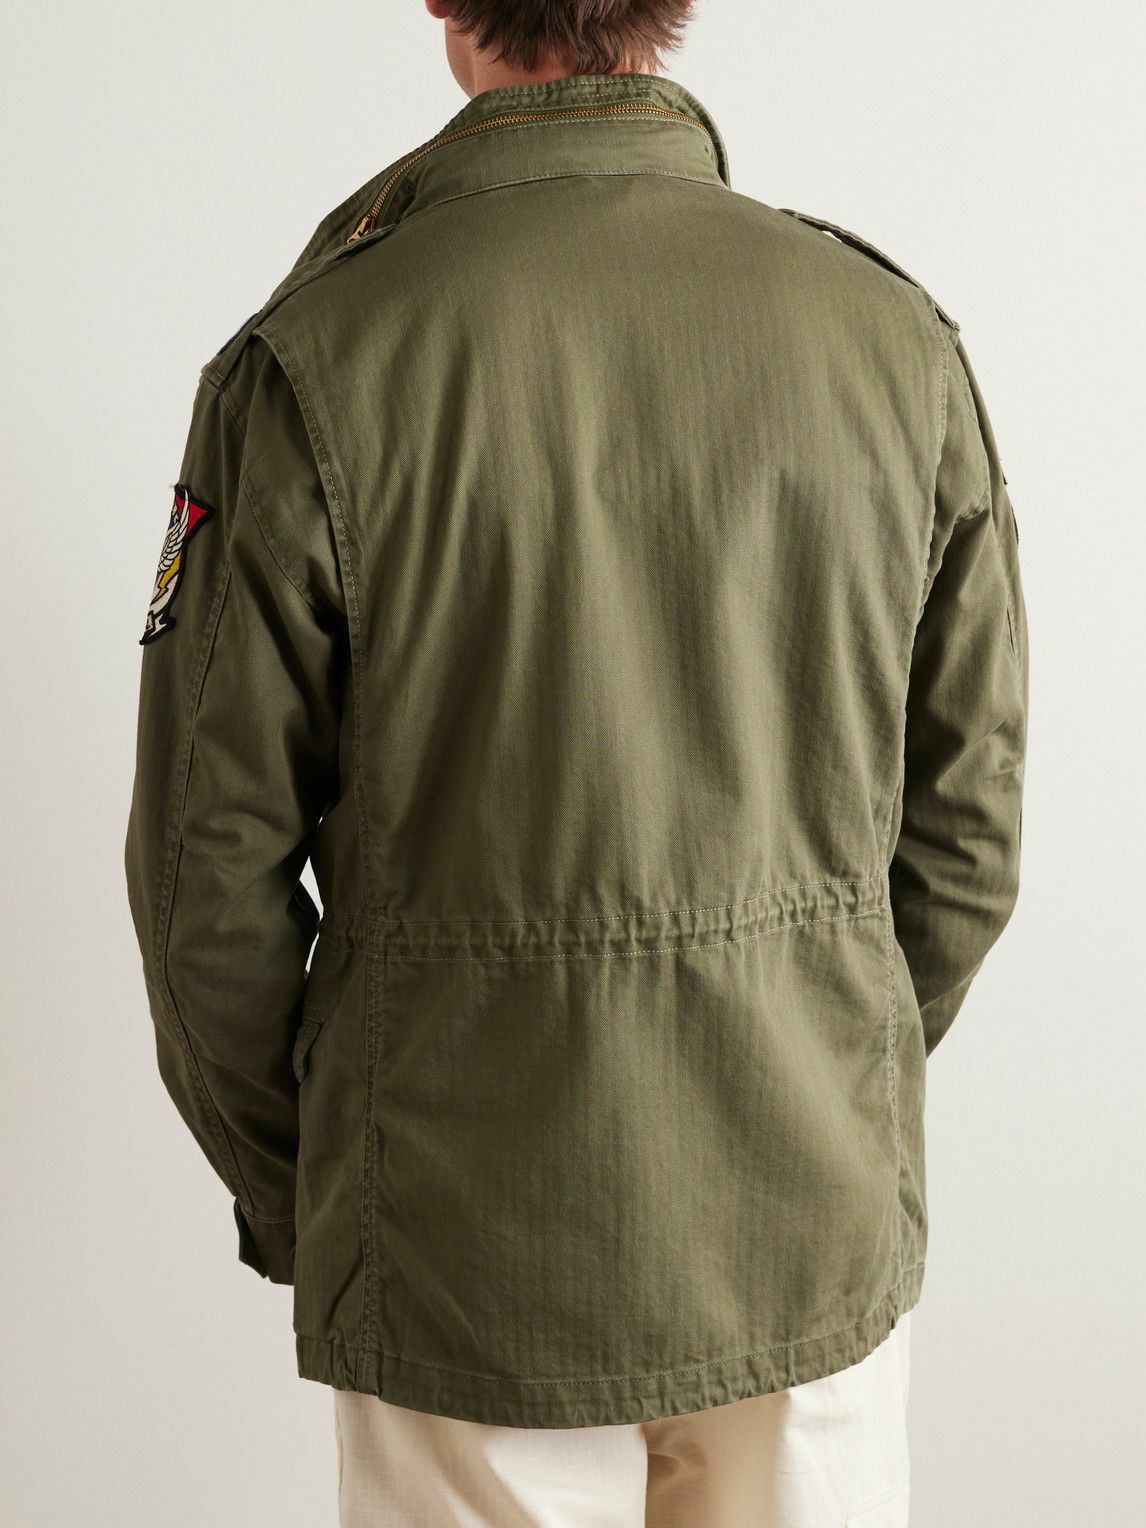 Polo Ralph Lauren - M65 Logo-Appliquéd Herringbone Cotton Field Jacket -  Green